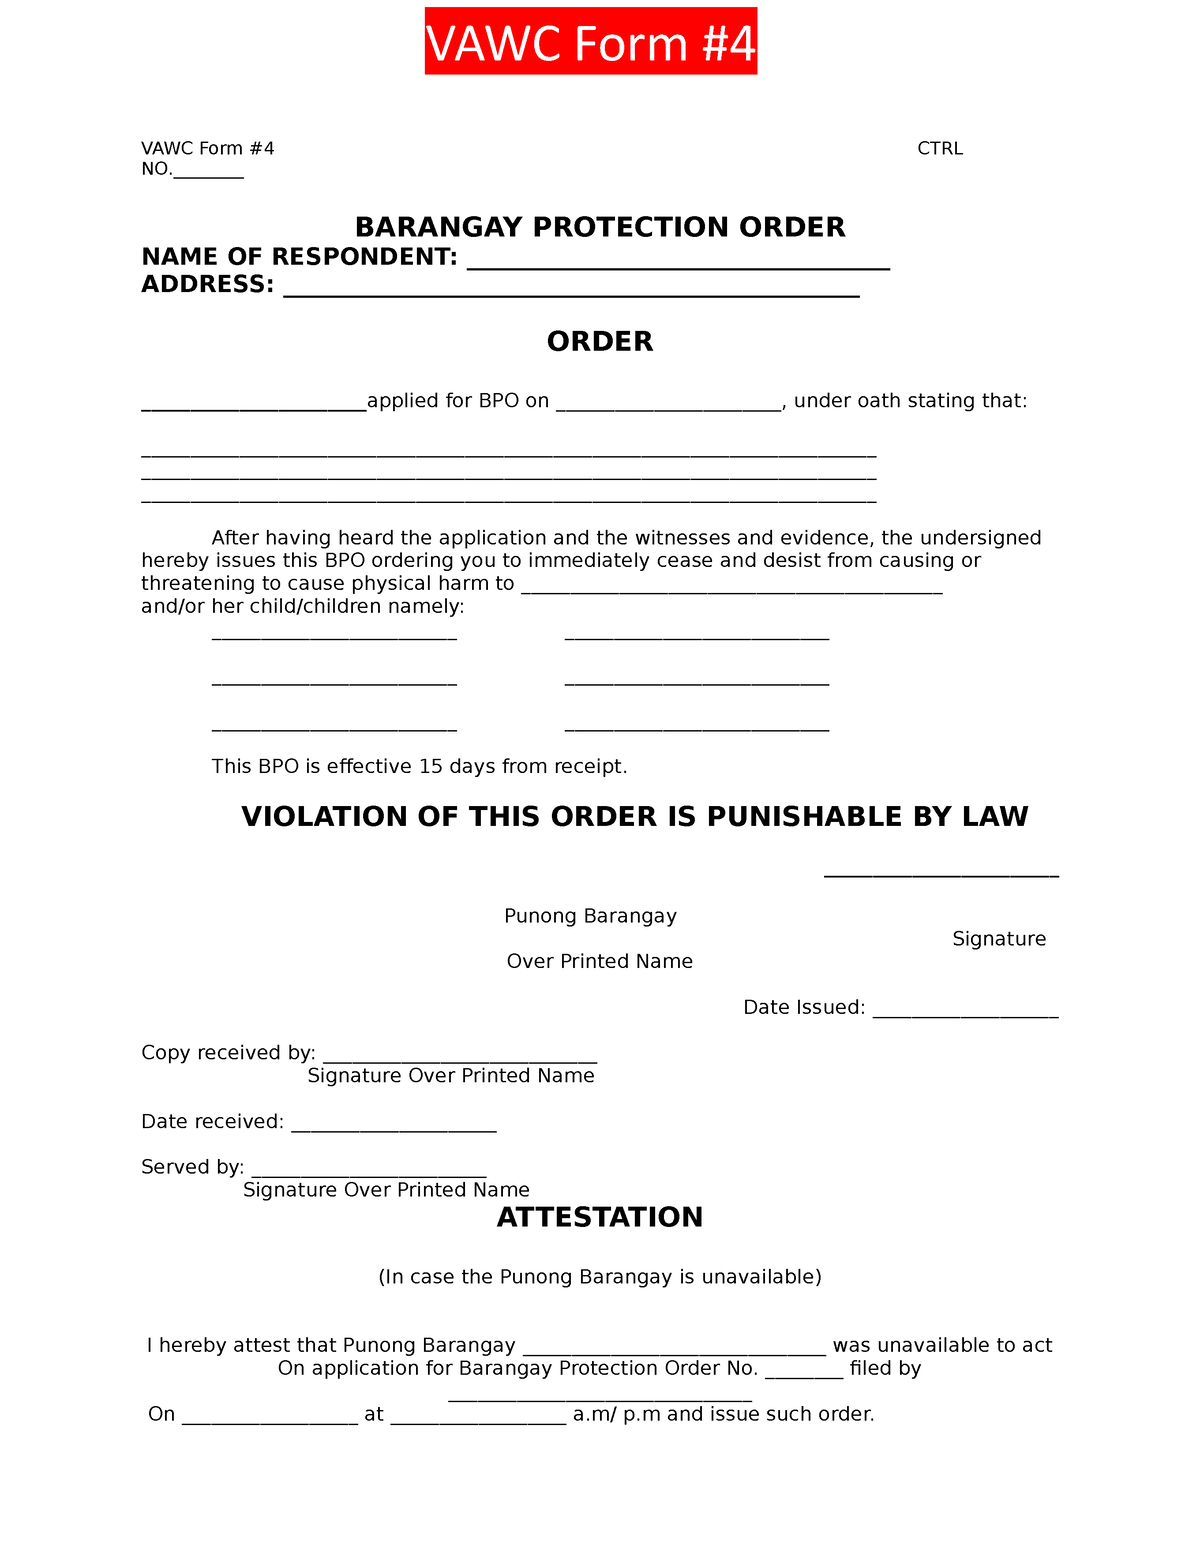 271565284 Barangay Protection Order - VAWC Form #4 CTRL NO ...